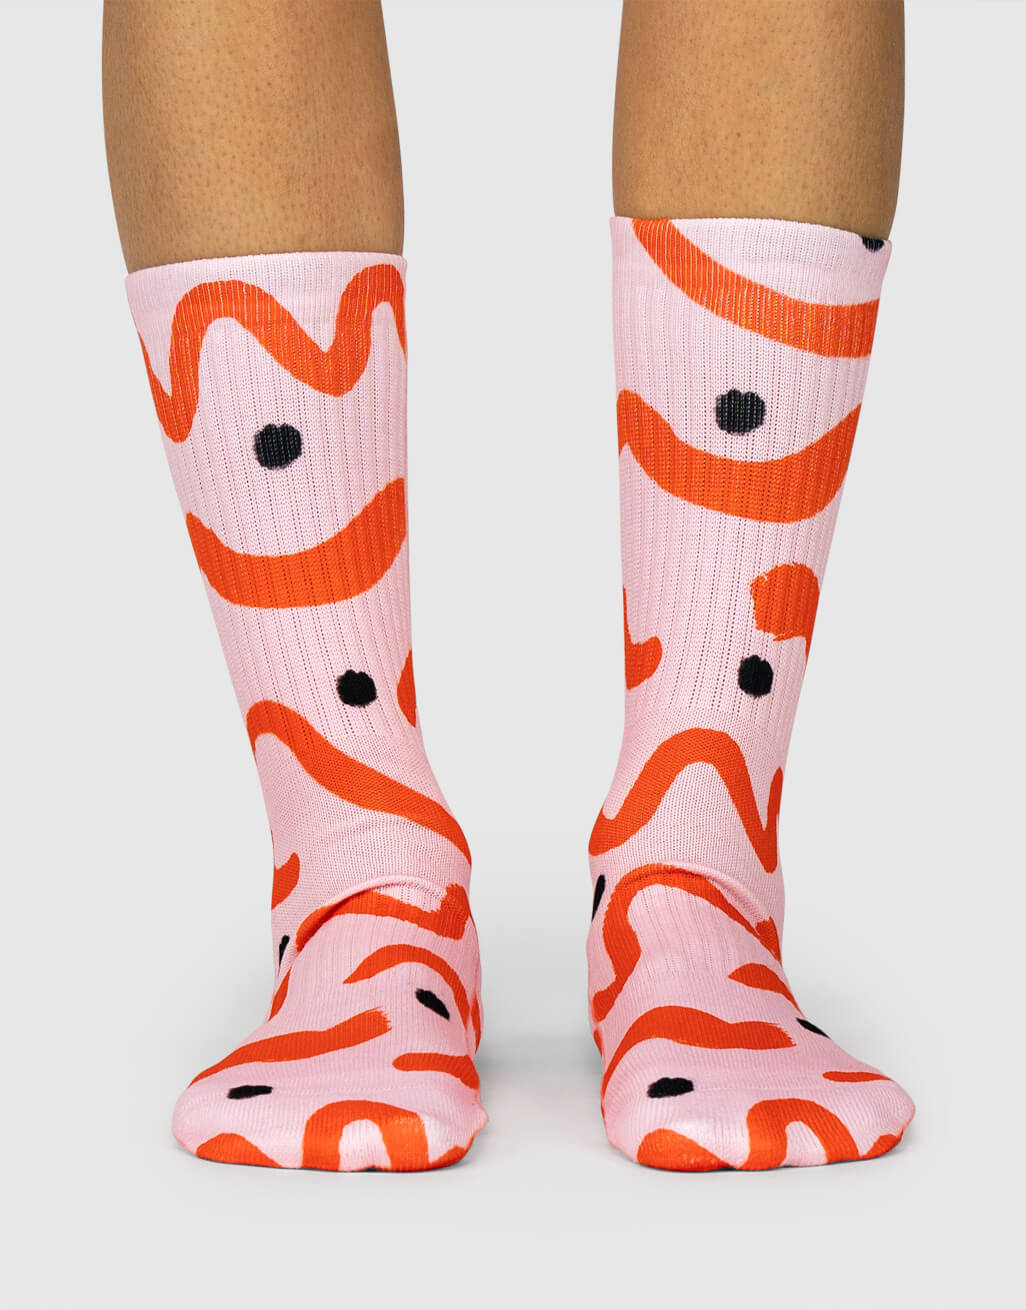 Paint Squiggle Socks